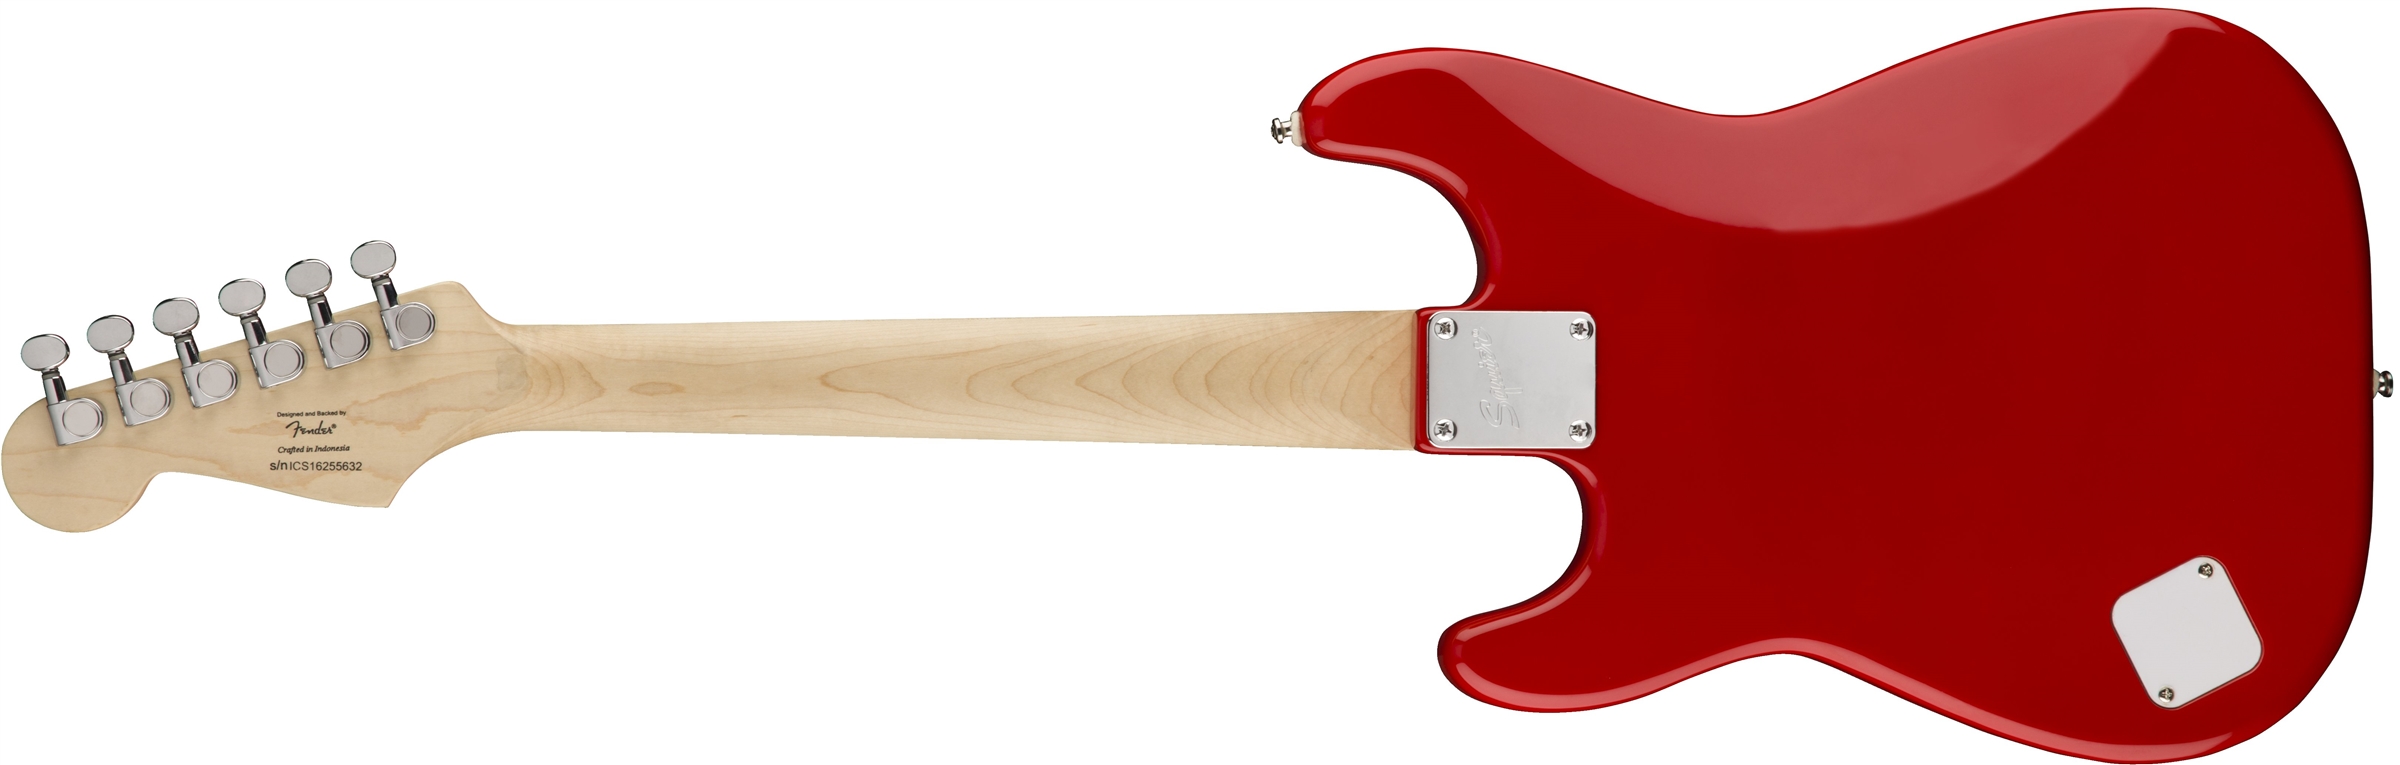 Squier Strat Mini V2 Sss Ht Rw - Torino Red - Electric guitar for kids - Variation 1